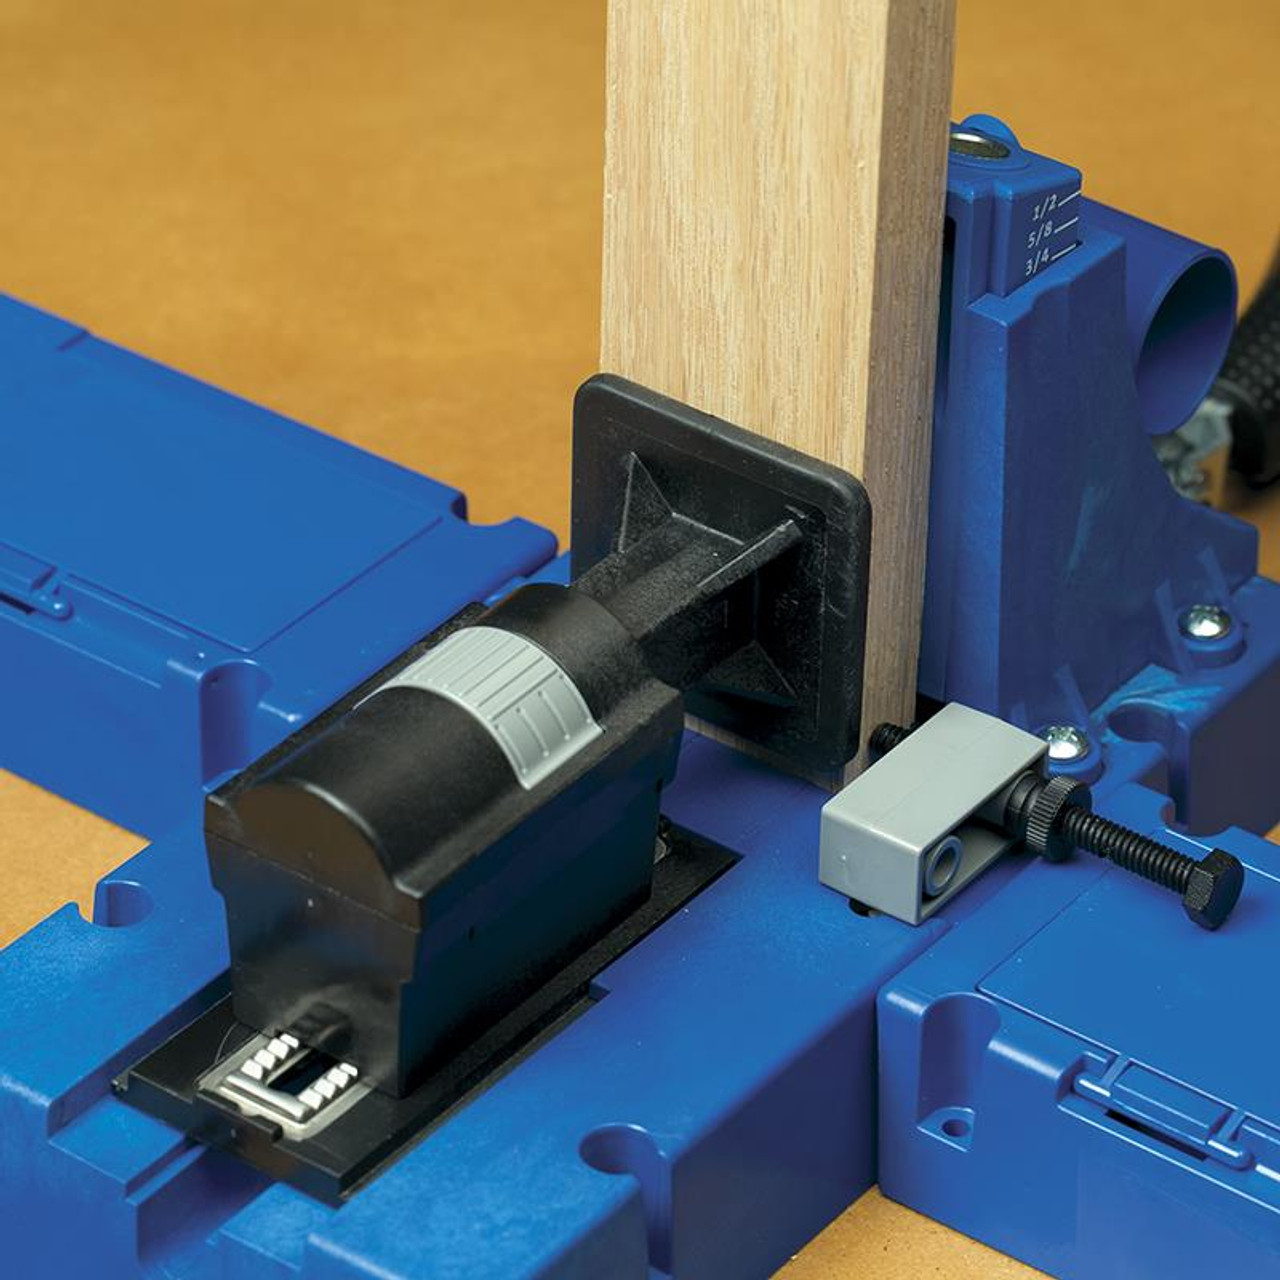 Kreg K5MS Pocket Hole Jig Master System for Woodworking Carpentry DIY Projects